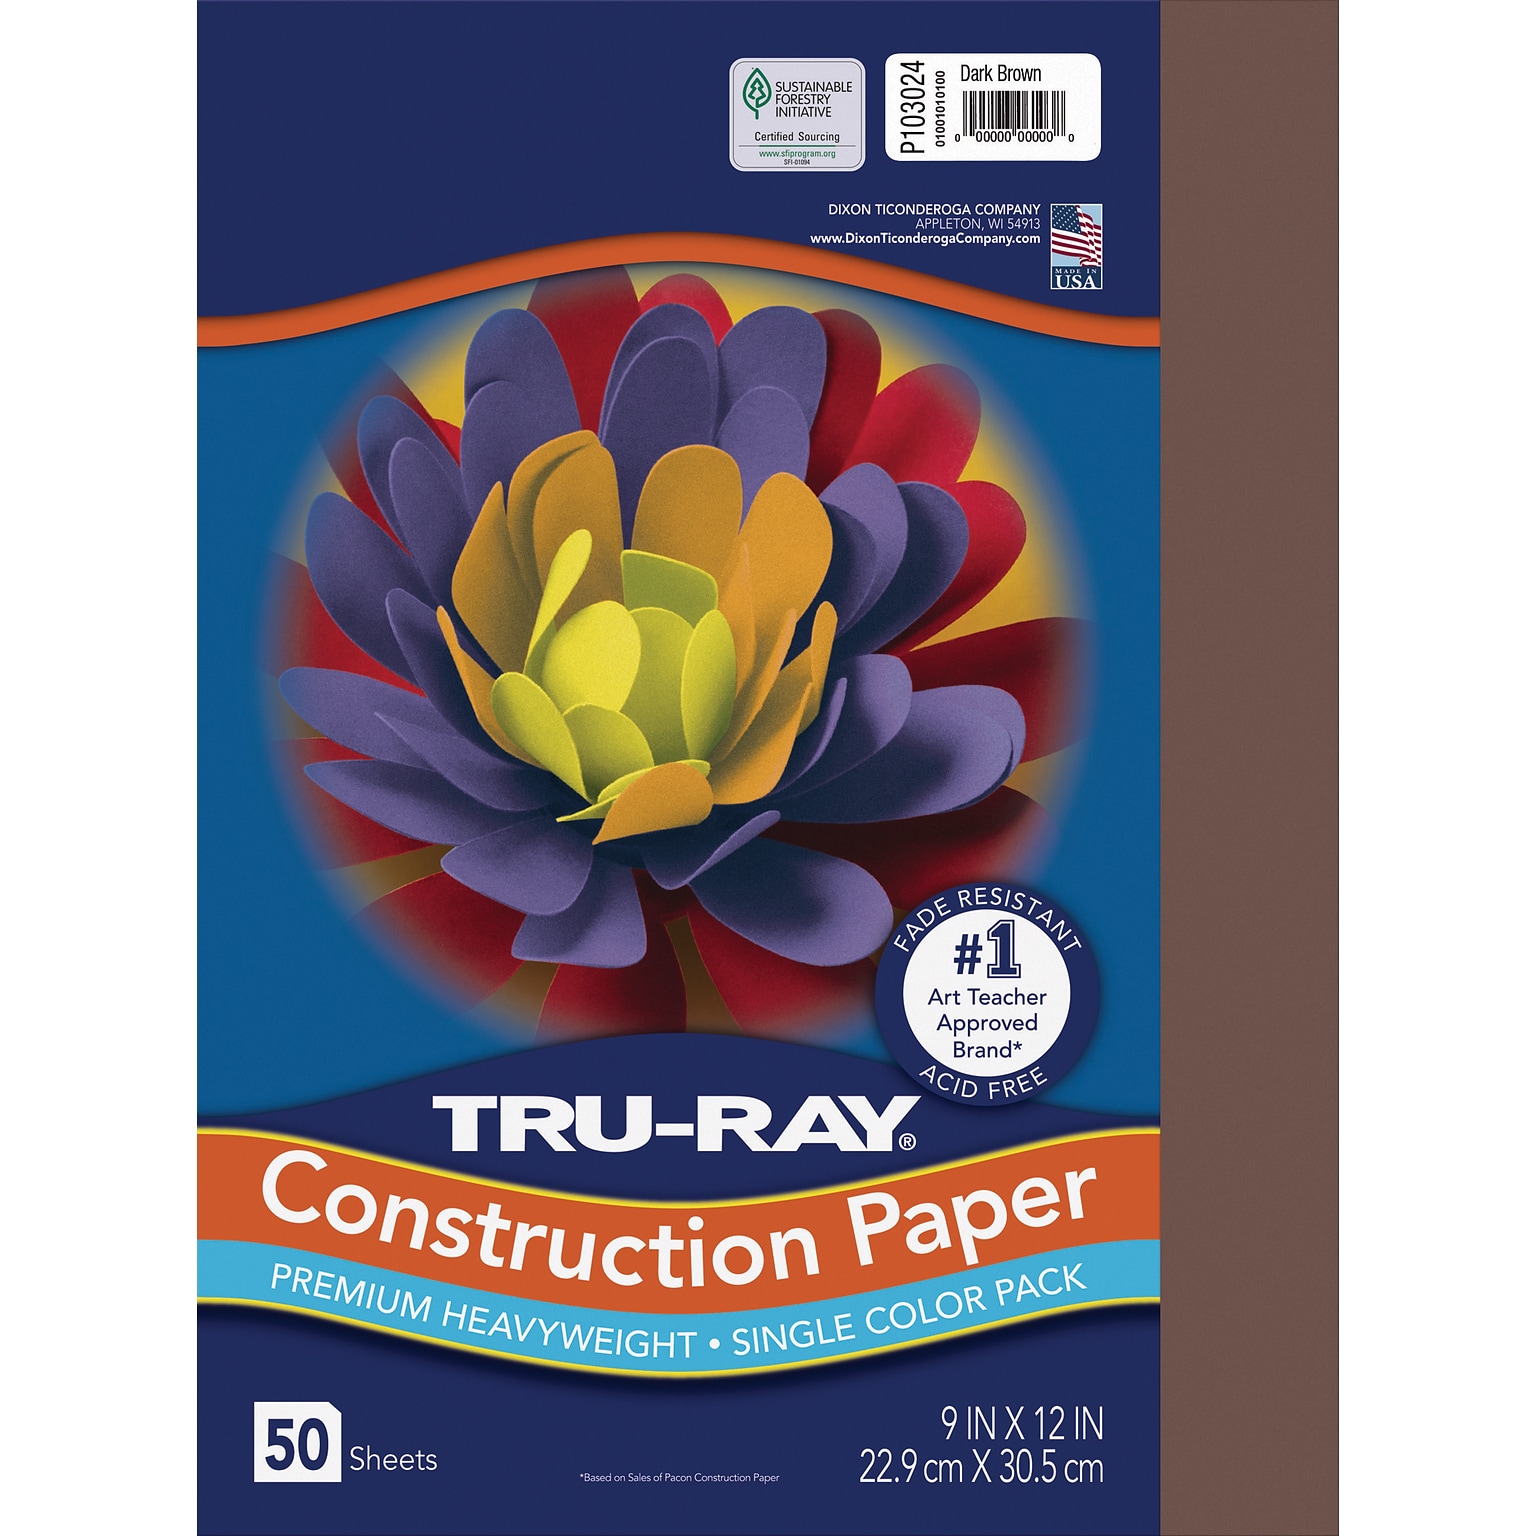 Tru-Ray 9 x 12 Construction Paper, Dark Brown, 50 Sheets (P103024)